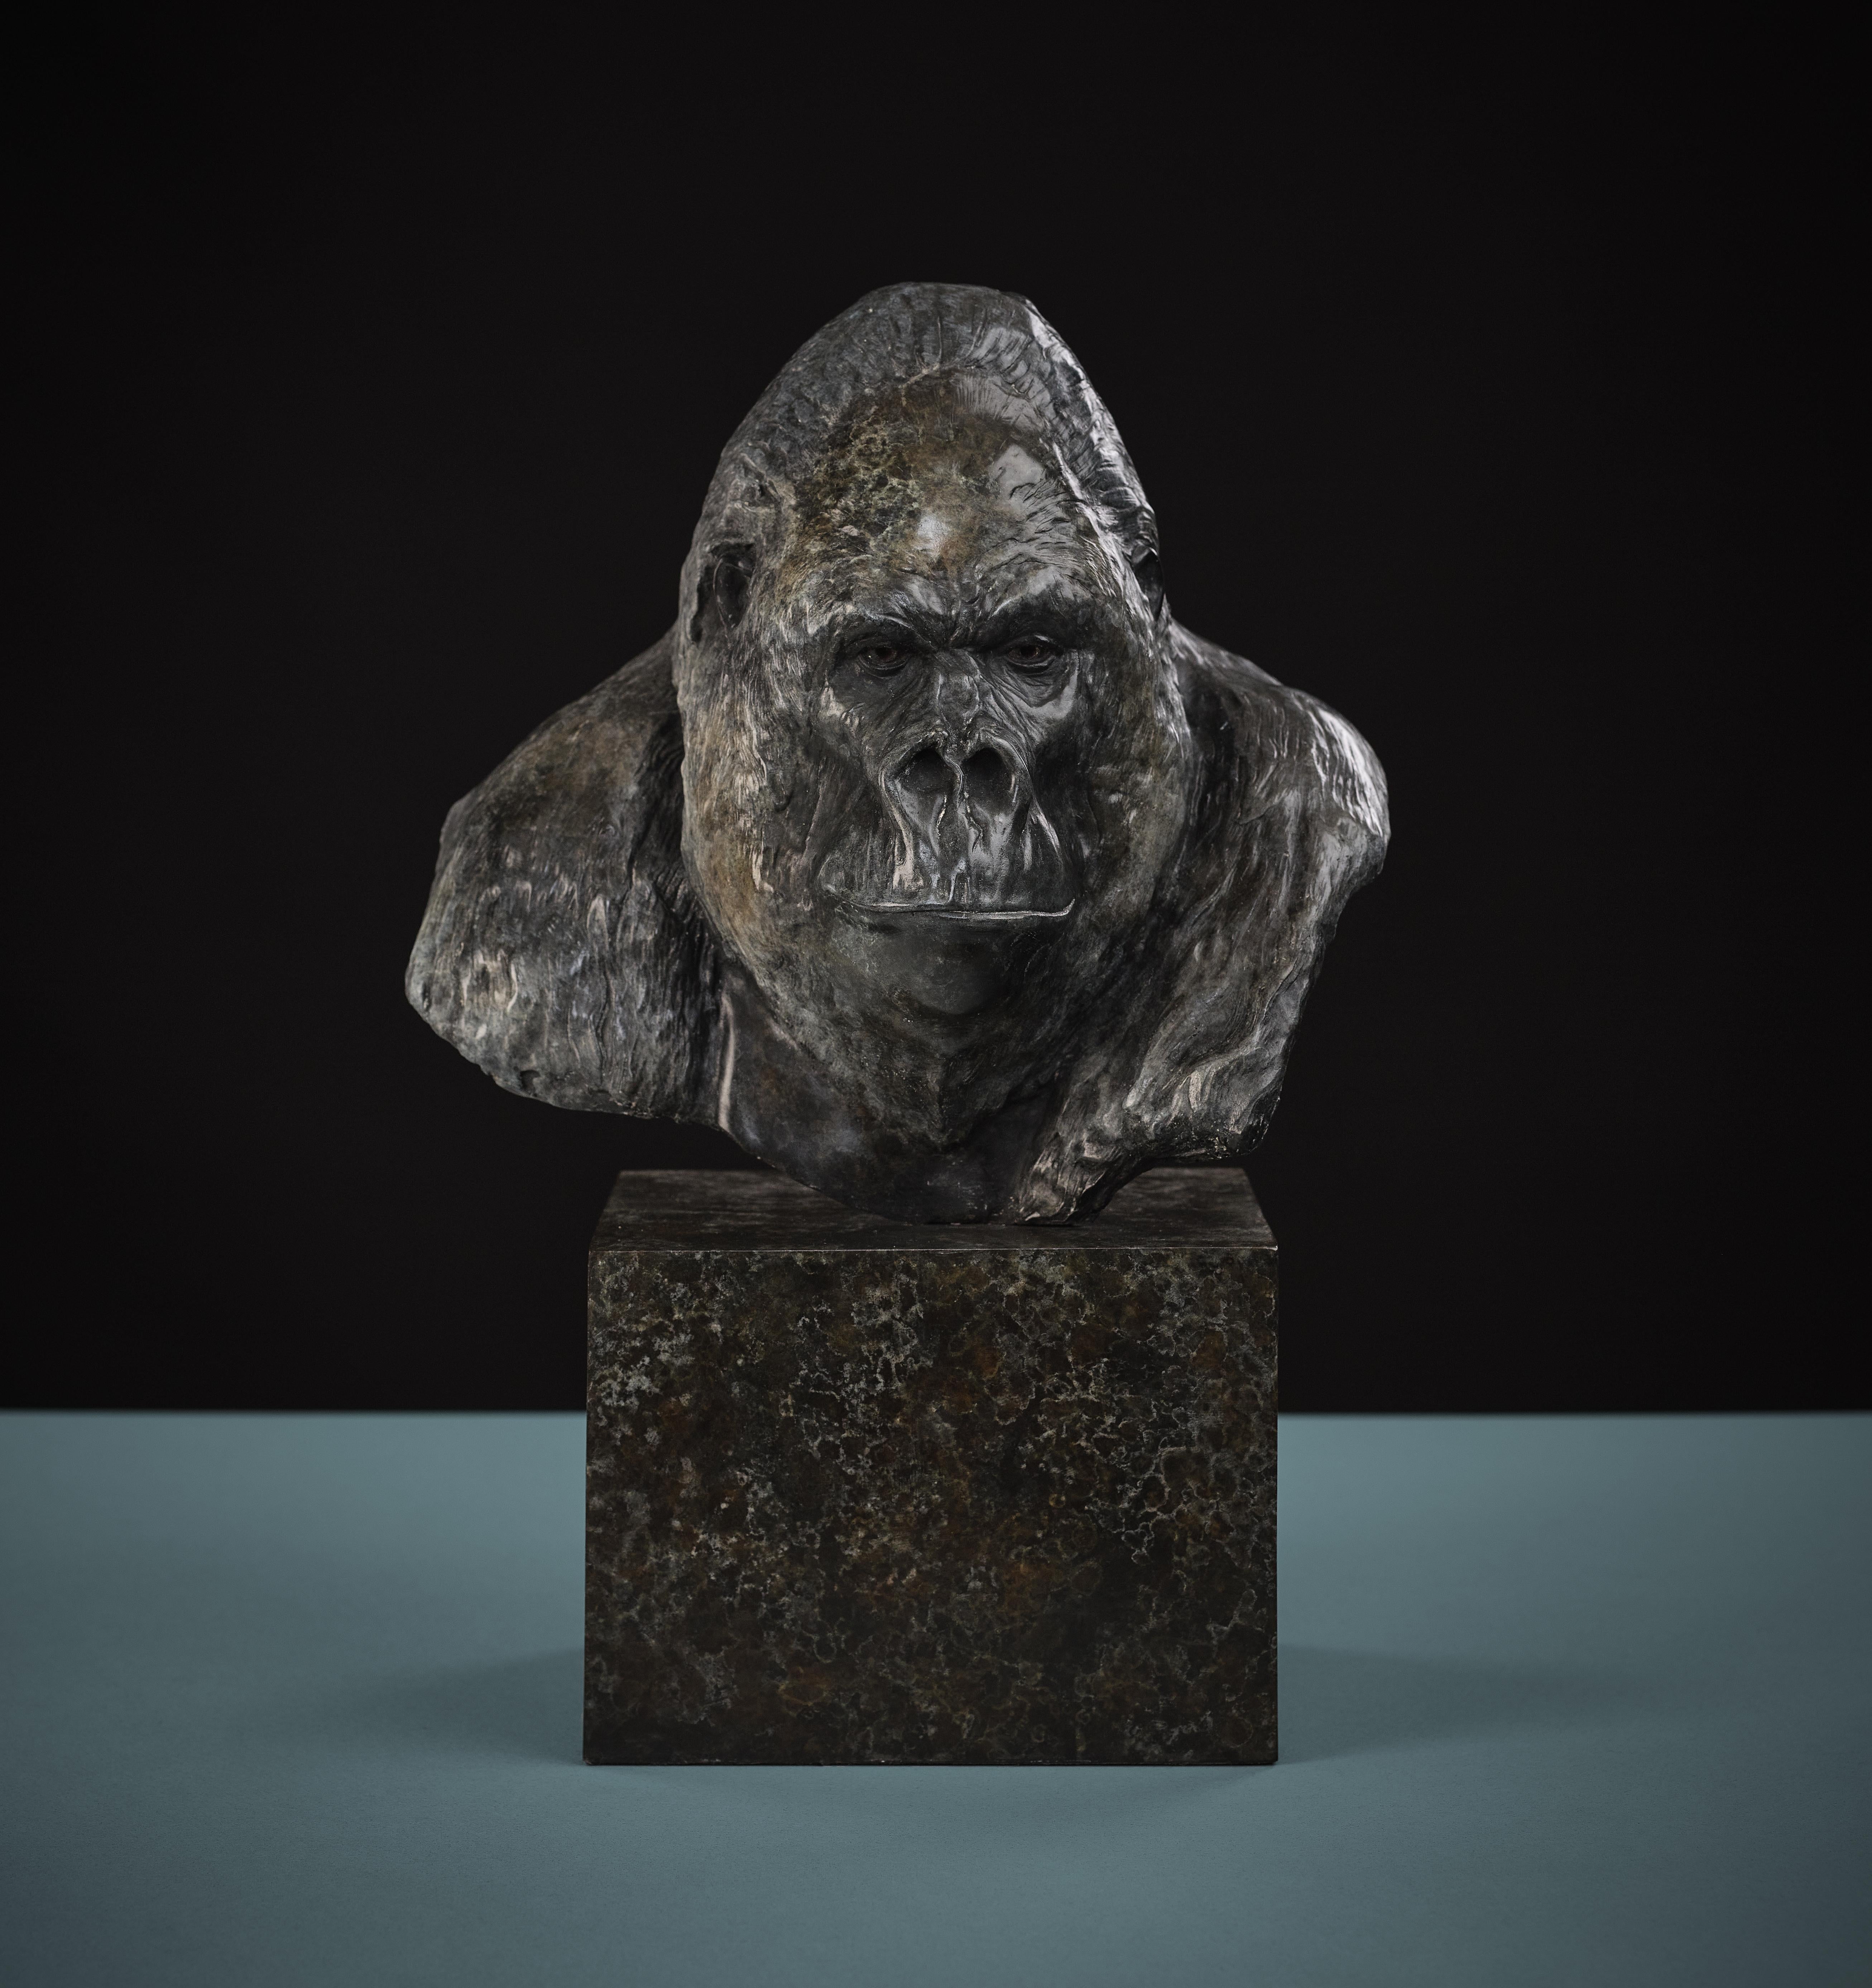 Tobias Martin Figurative Sculpture - 'Nico Jnr' Contemporary Bronze Sculpture of a Gorilla on a bronze plinth 